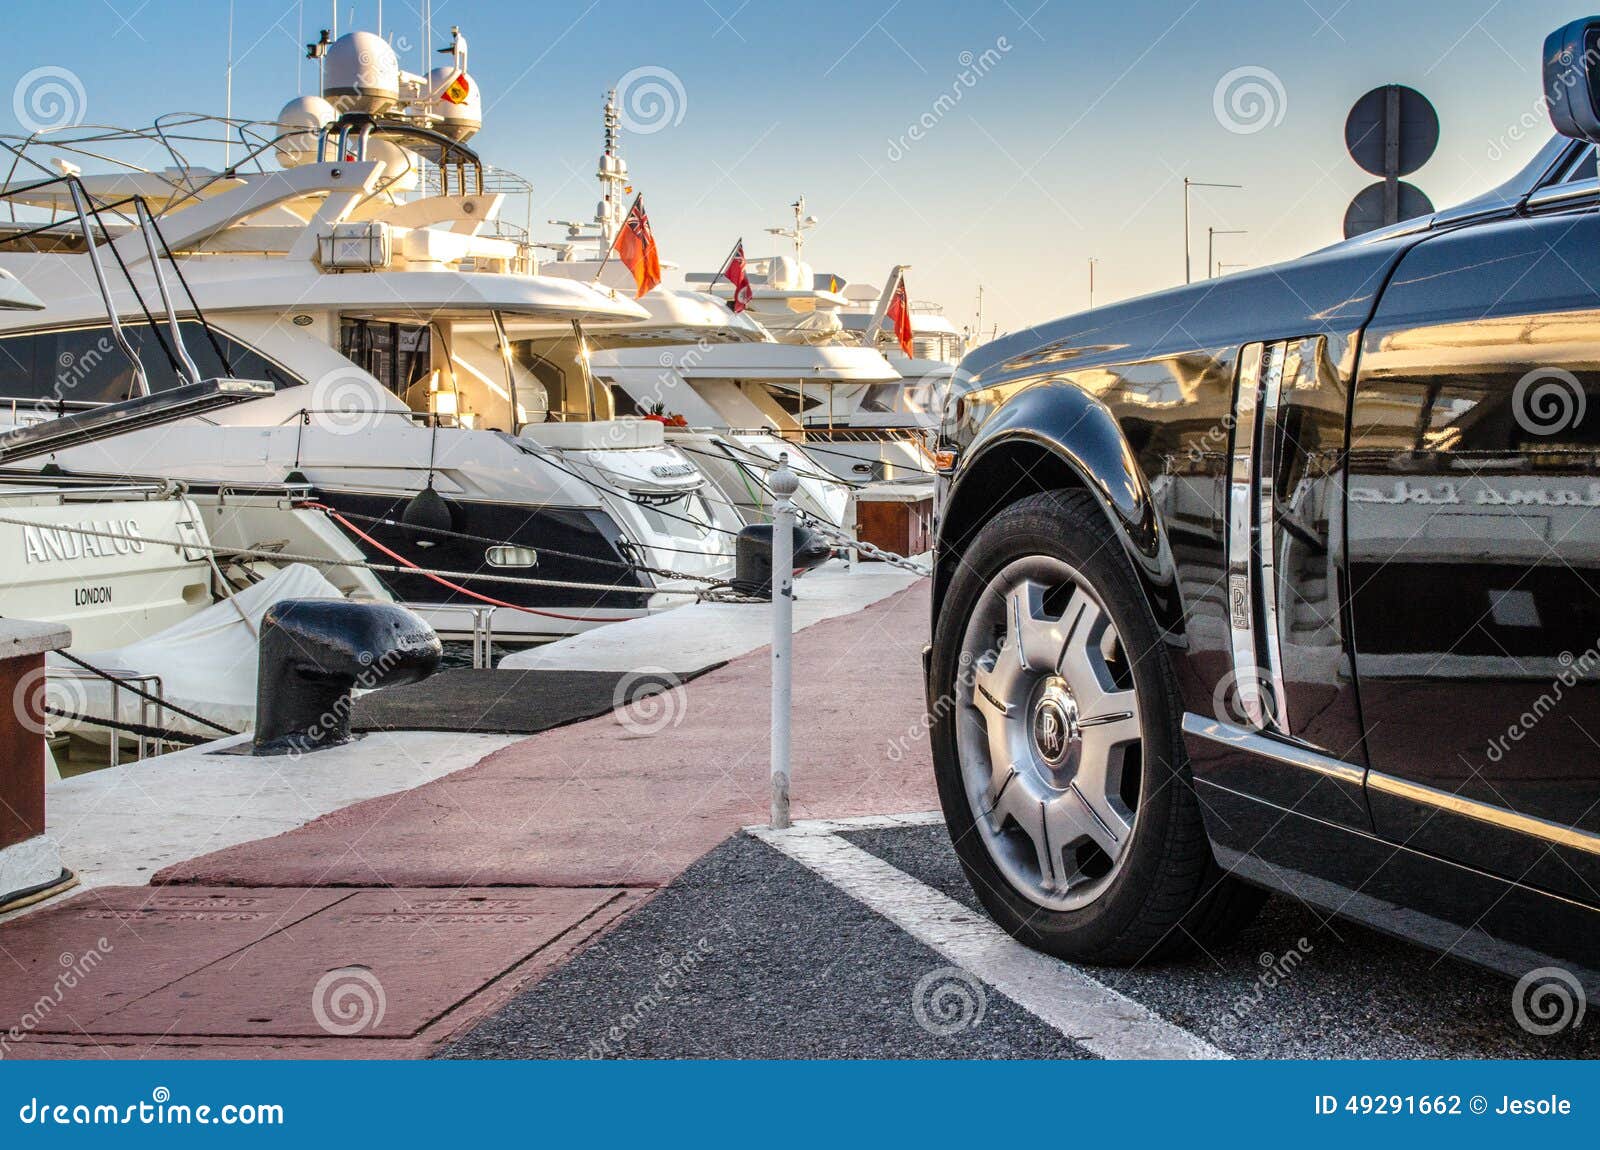 puerto banus cars